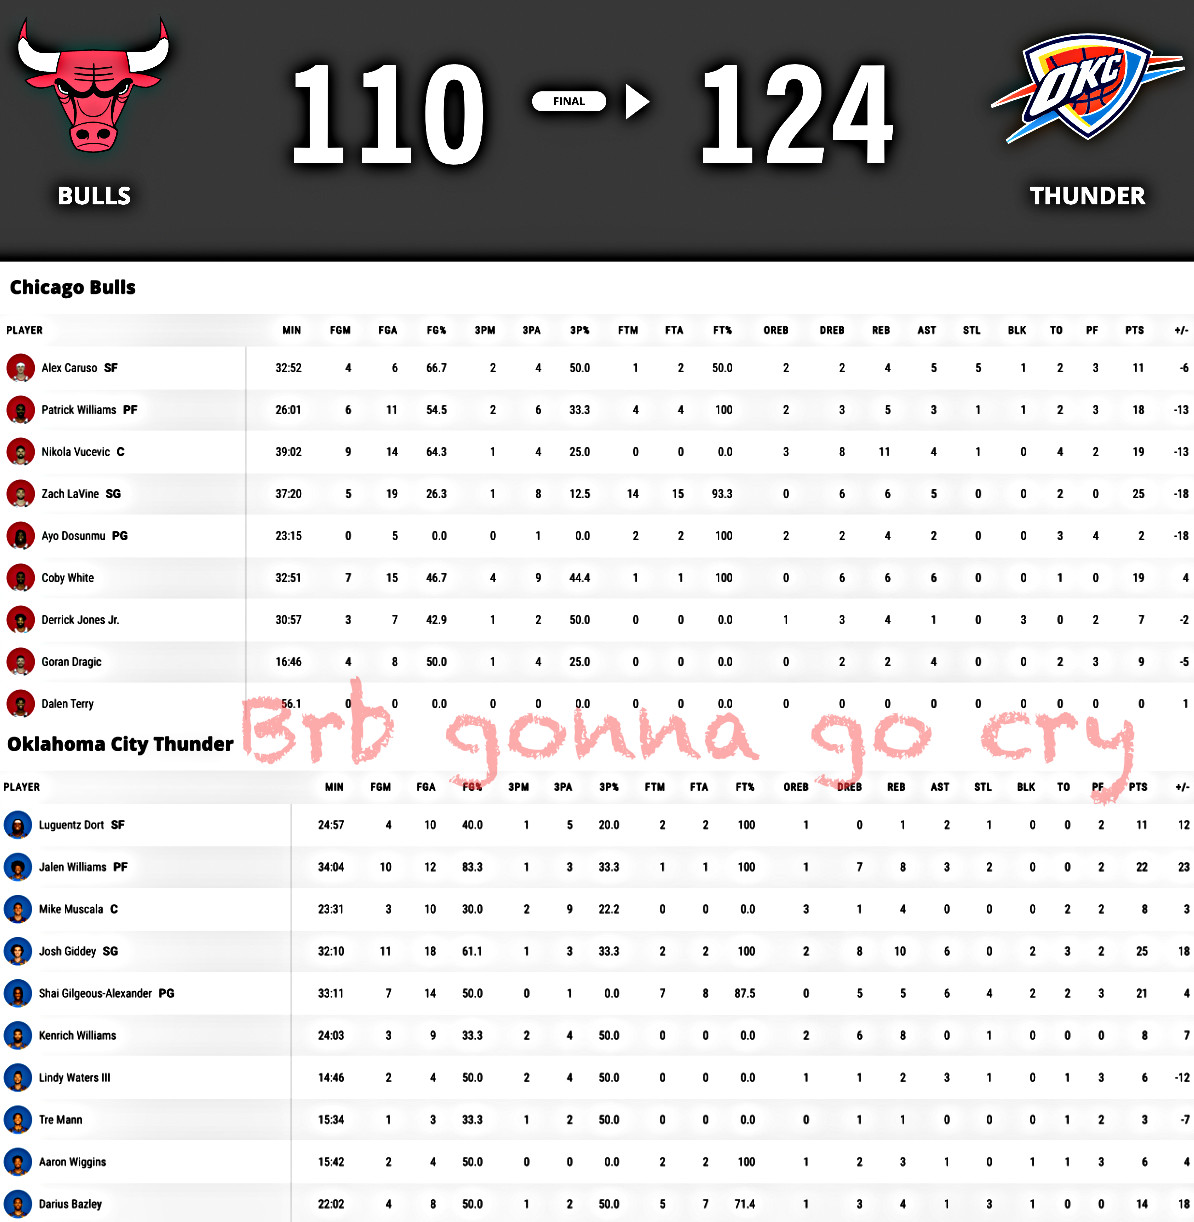 Enhanced ESPN NBA box score